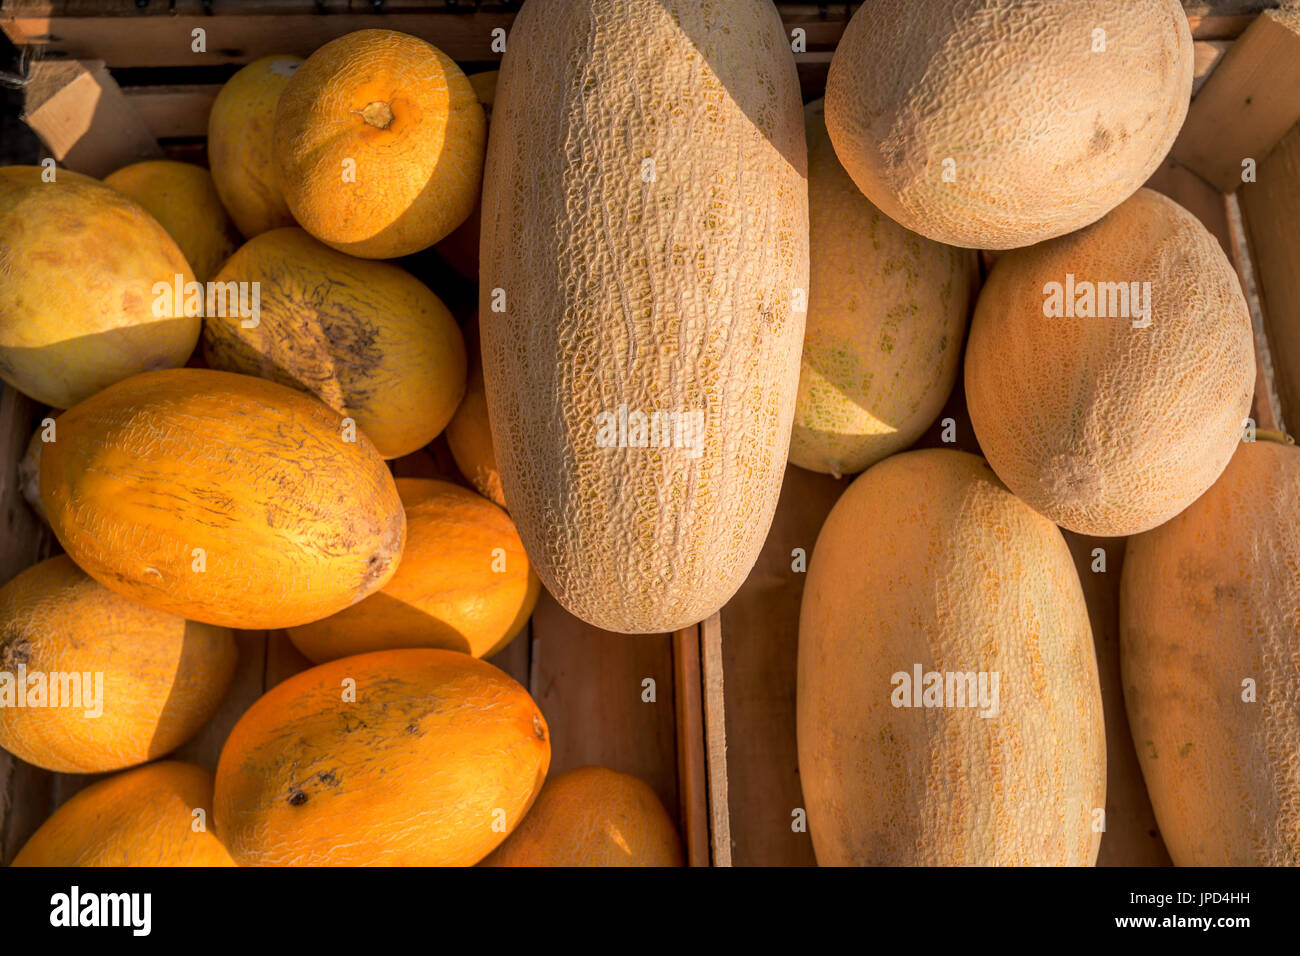 Ripe yellow melons Stock Photo